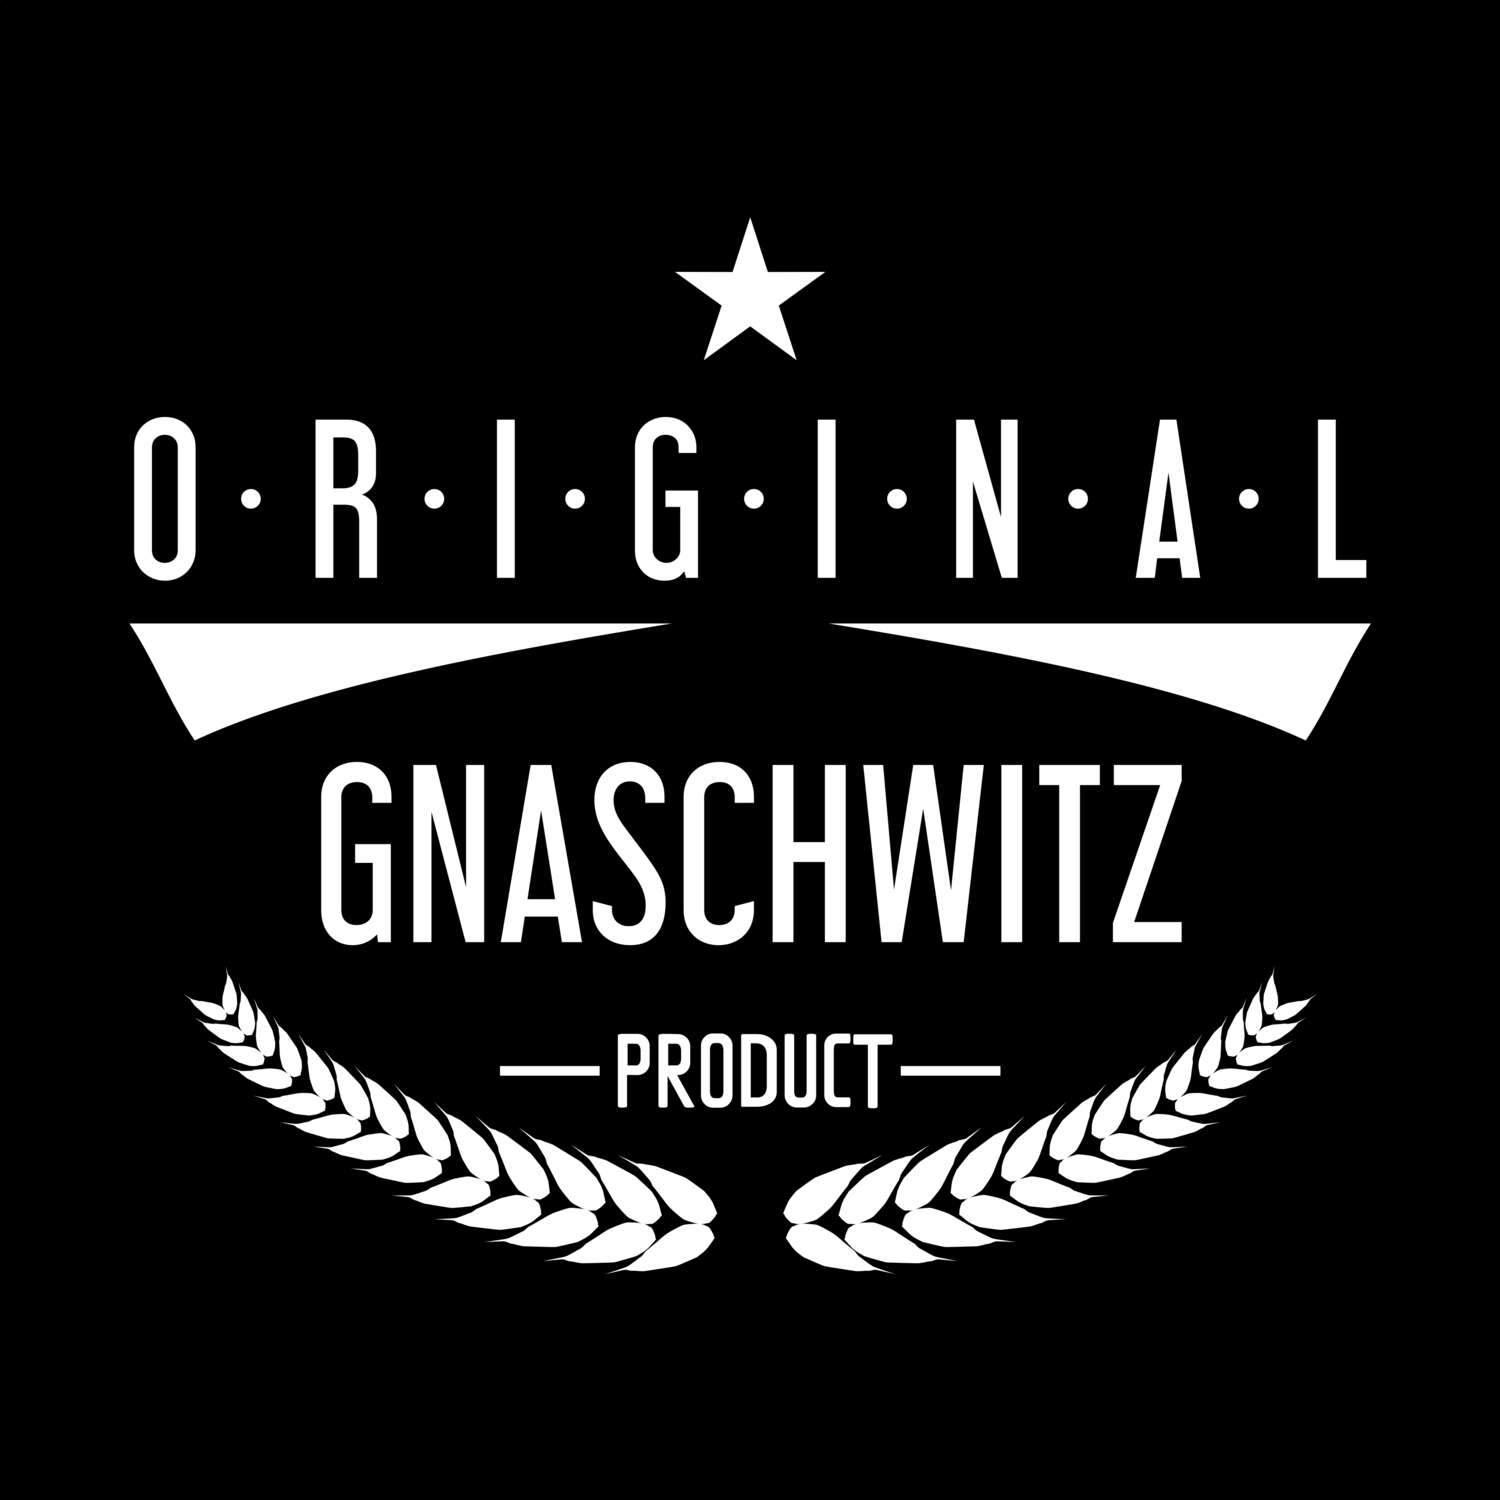 Gnaschwitz T-Shirt »Original Product«